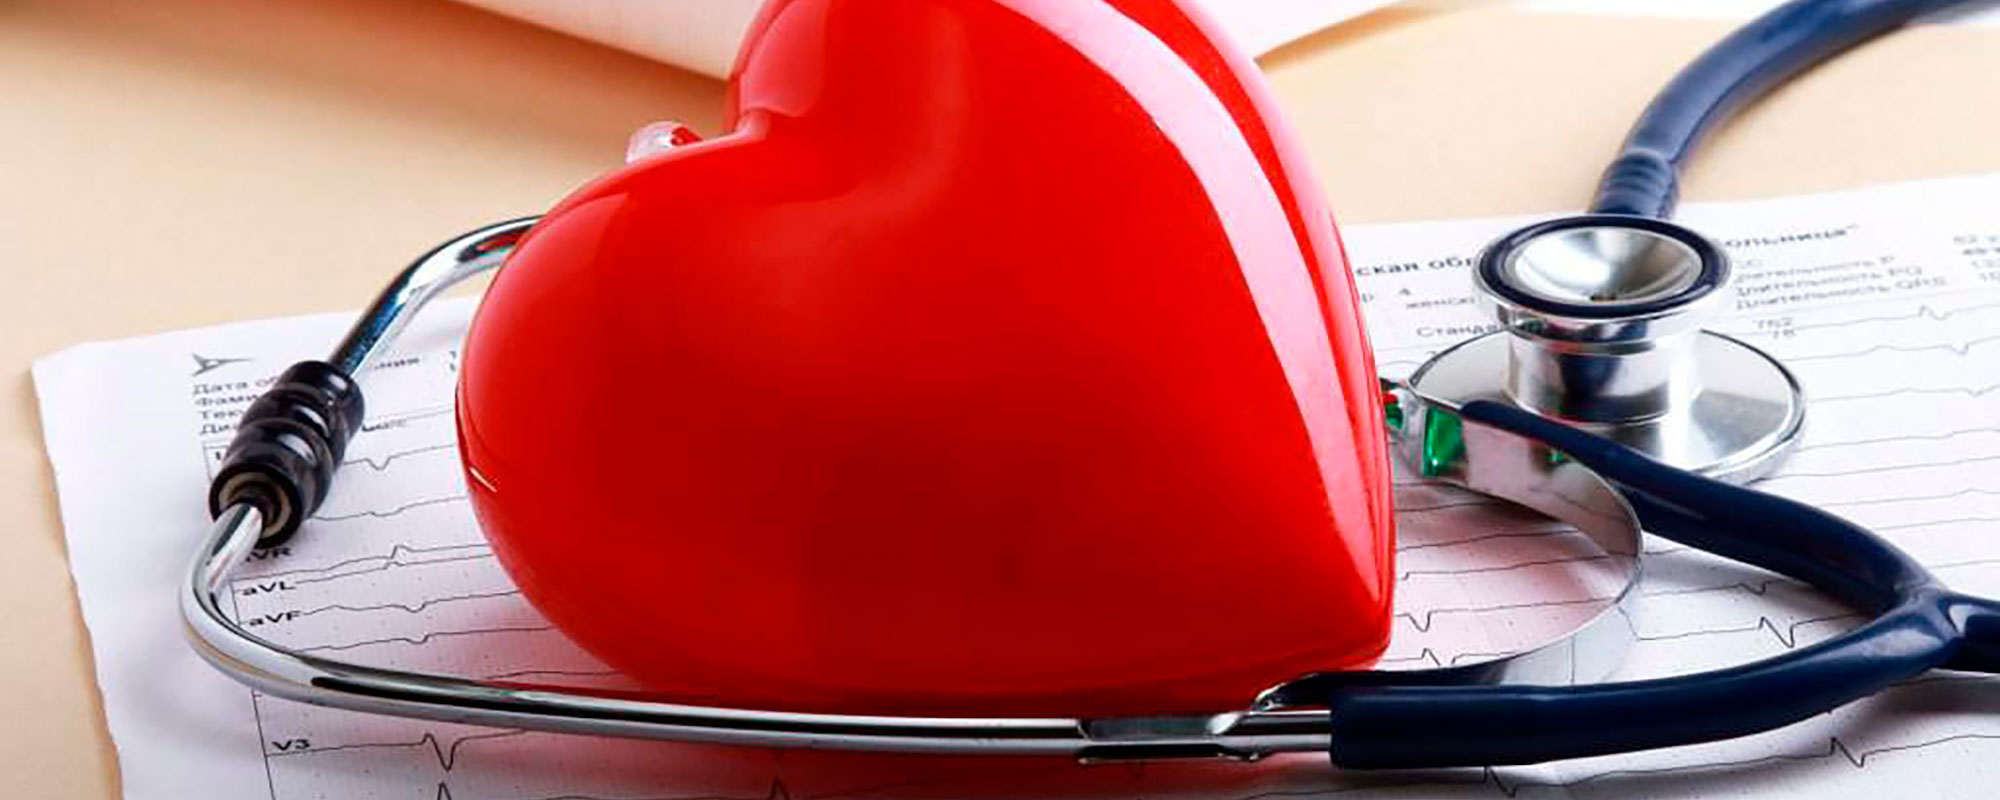 ЭКГ сердца - Как снимается кардиограмма сердца?